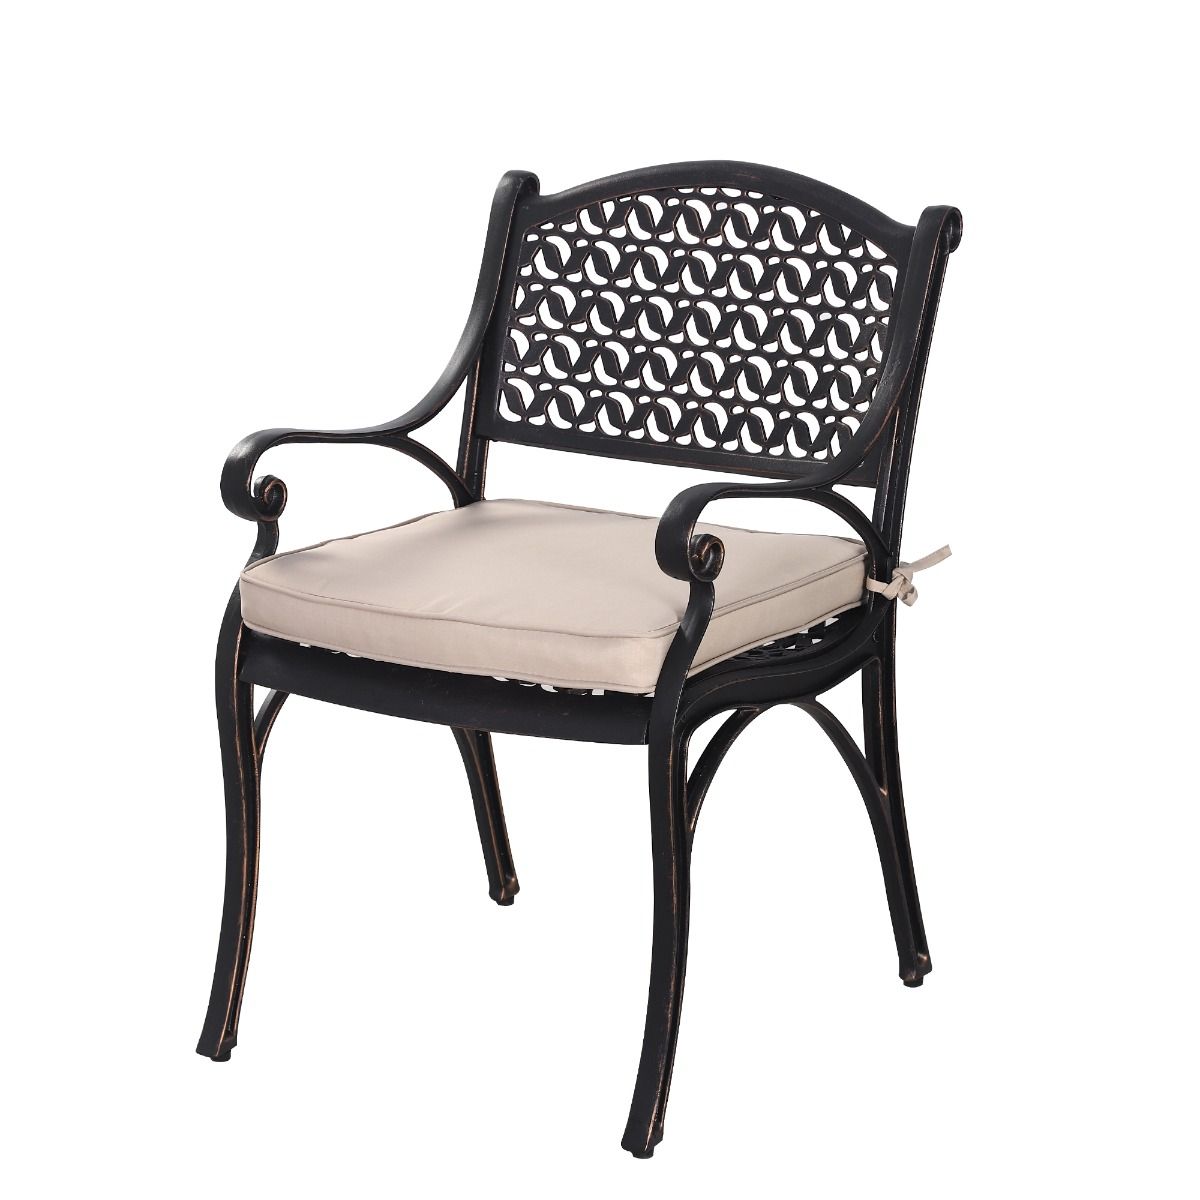 Outdoor chair Cast Aluminium Chairs